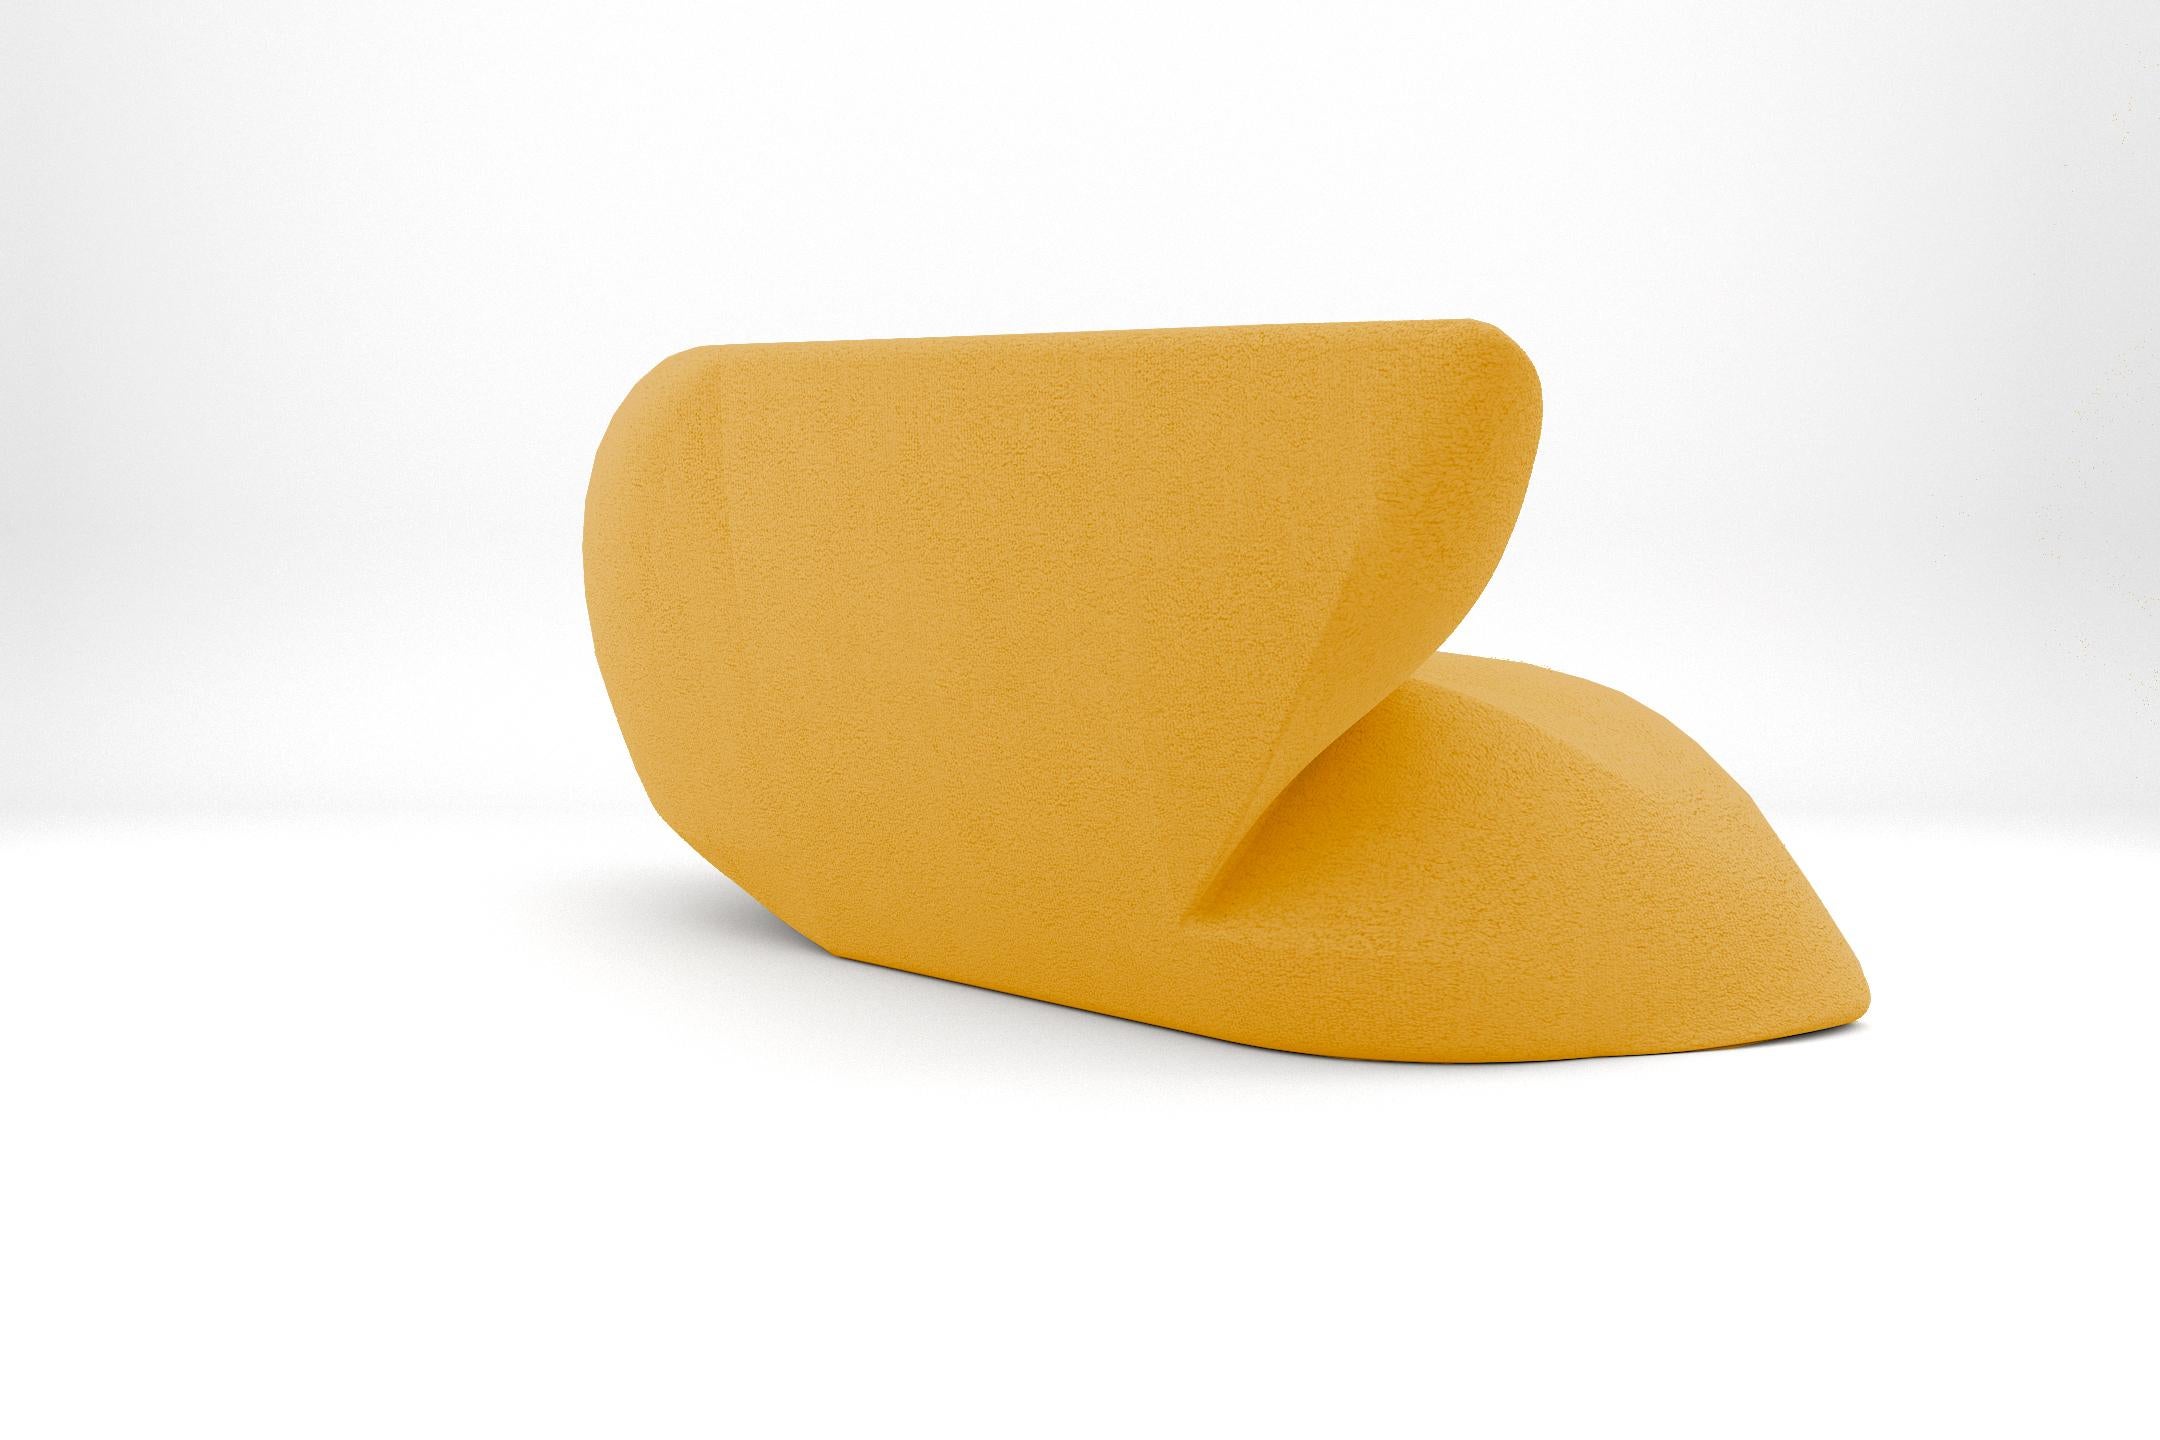 European Delta Sofa - Modern Lemon Yellow Upholstered Two Seat Sofa For Sale